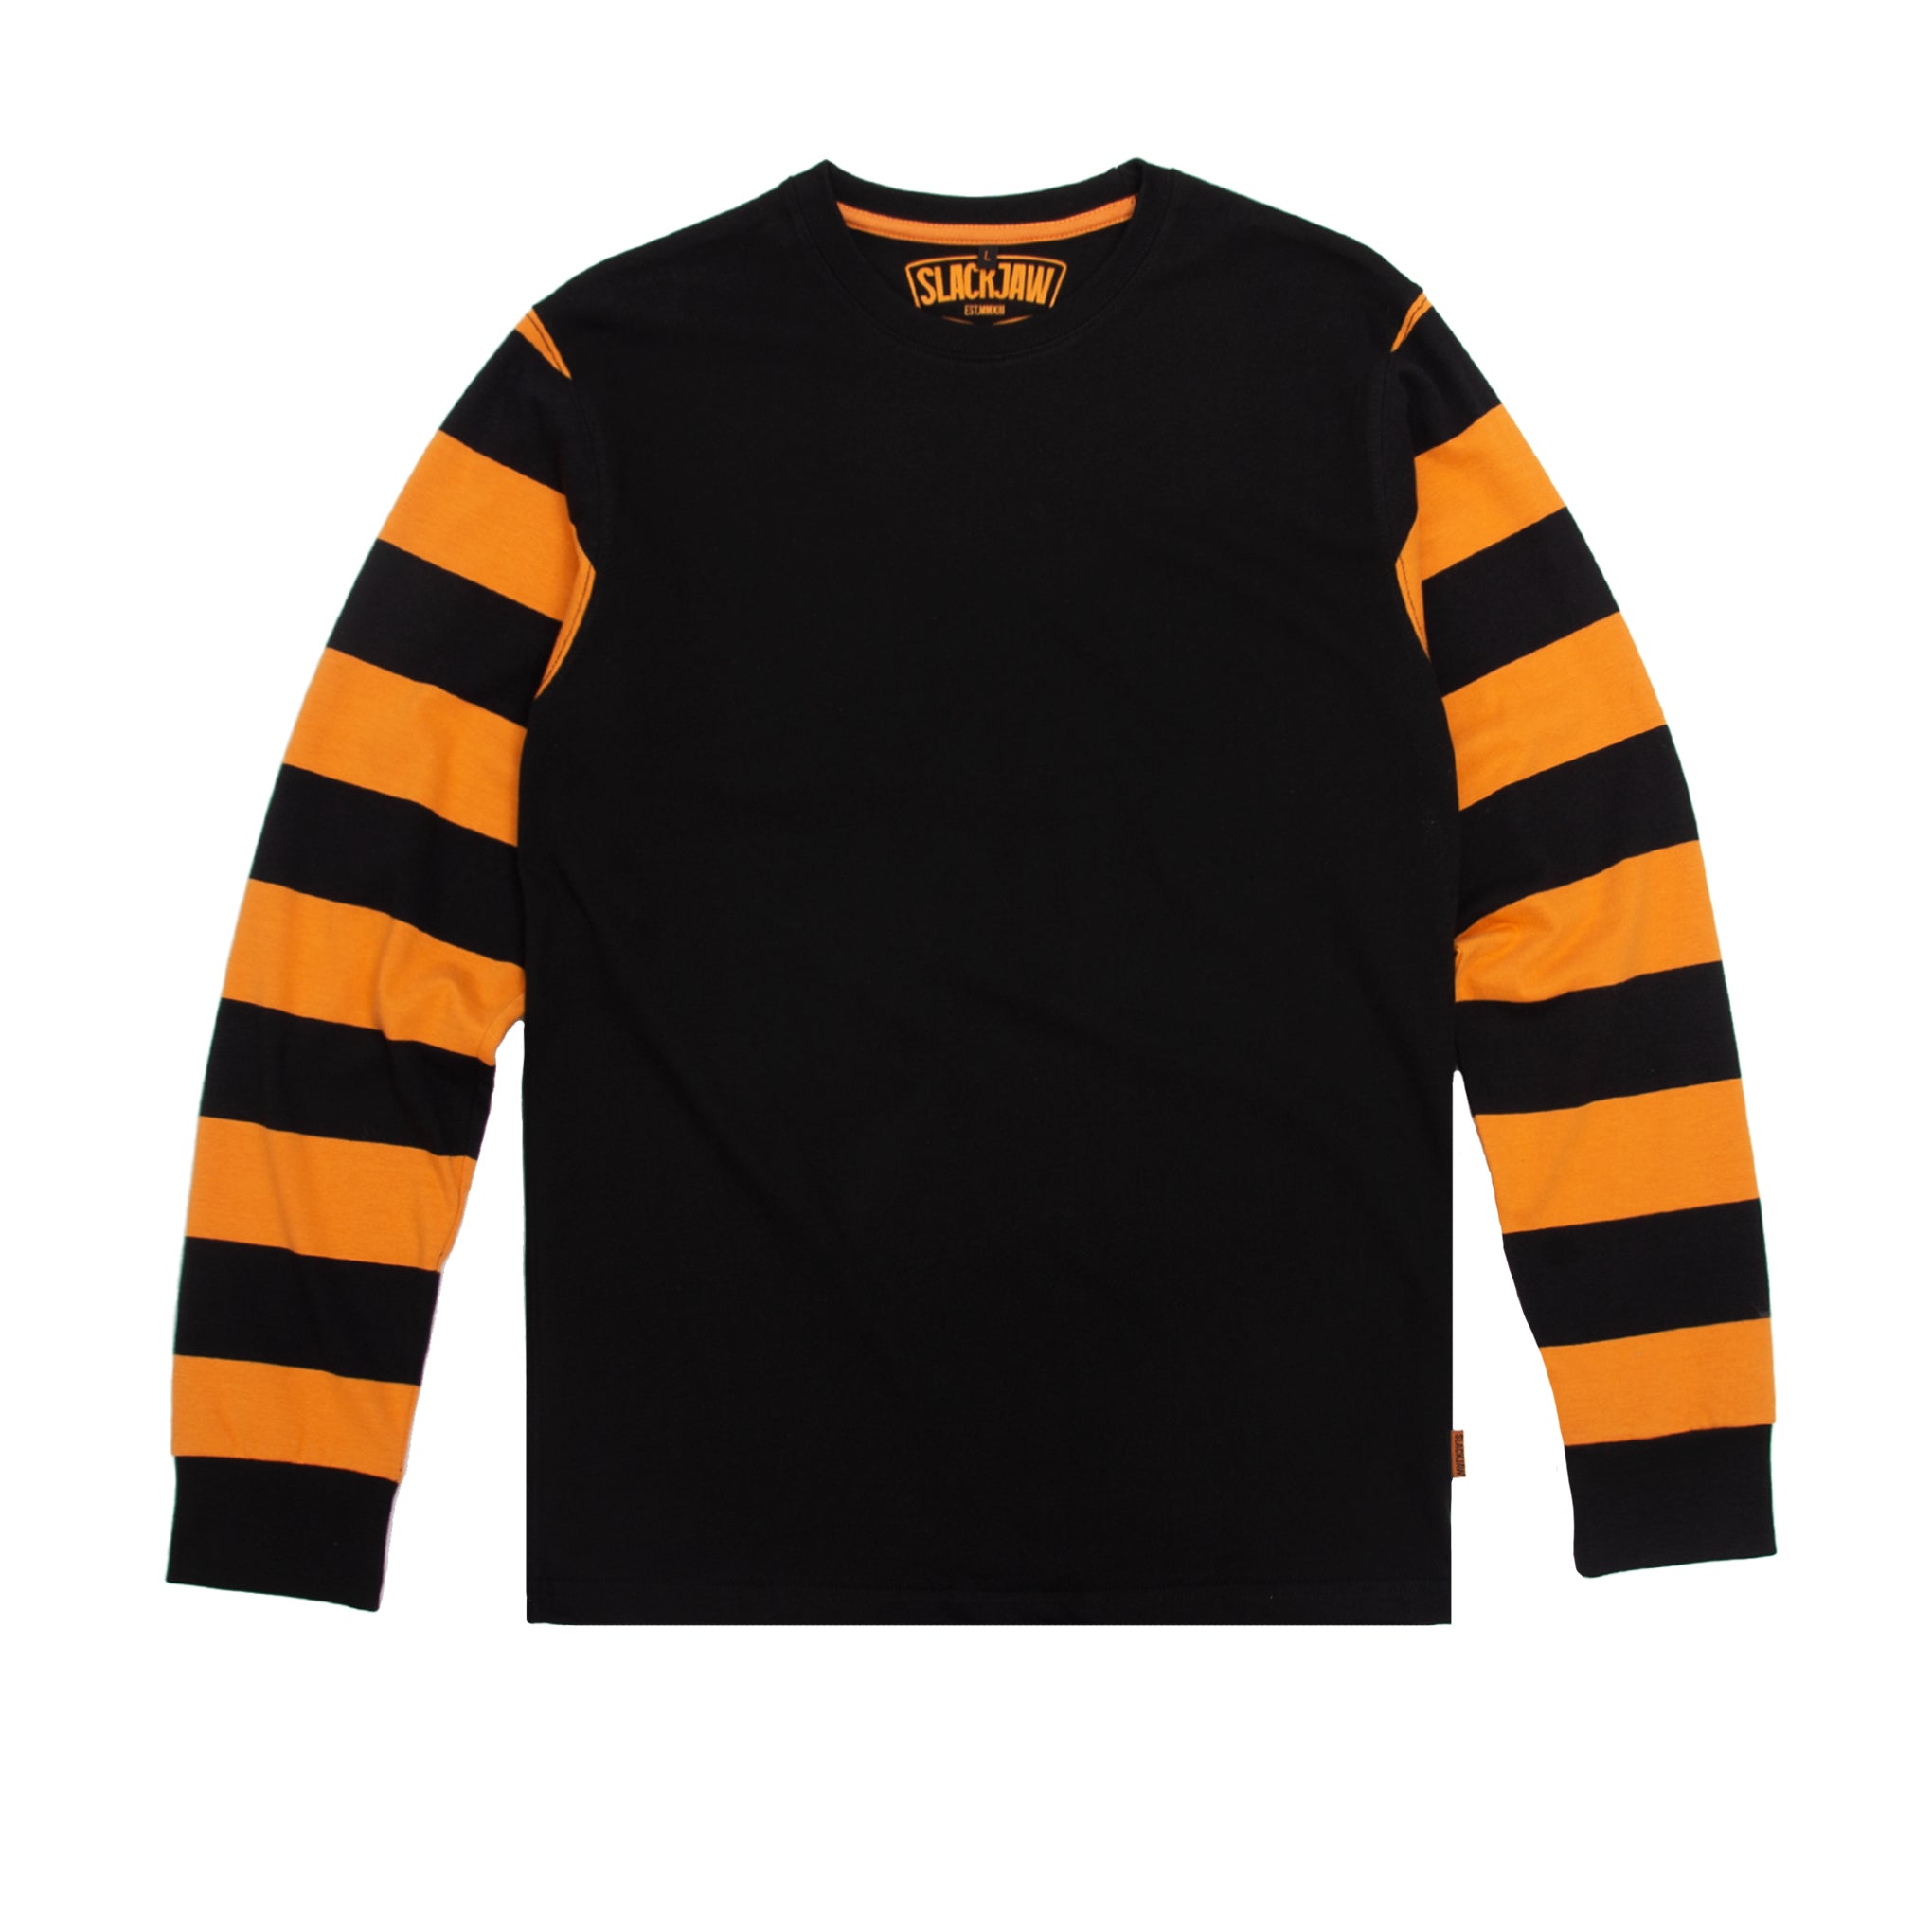 Essential Breakout Long Sleeve T Shirt - Black/Rust